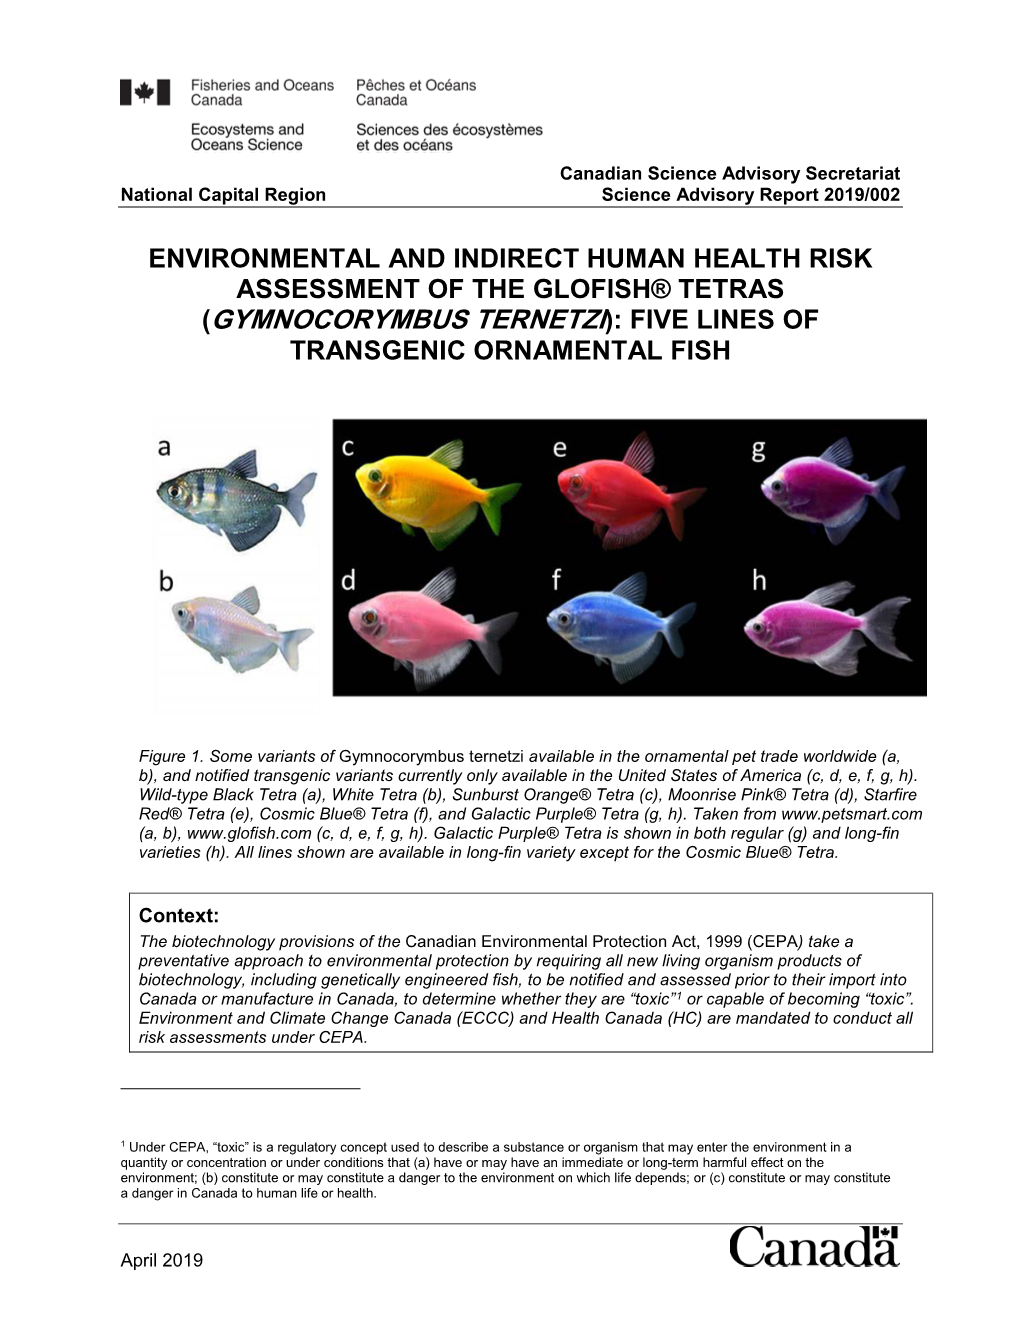 Environmental and Indirect Human Health Risk Assessment of the Glofish® Tetras (Gymnocorymbus Ternetzi): Five Lines of Transgenic Ornamental Fish